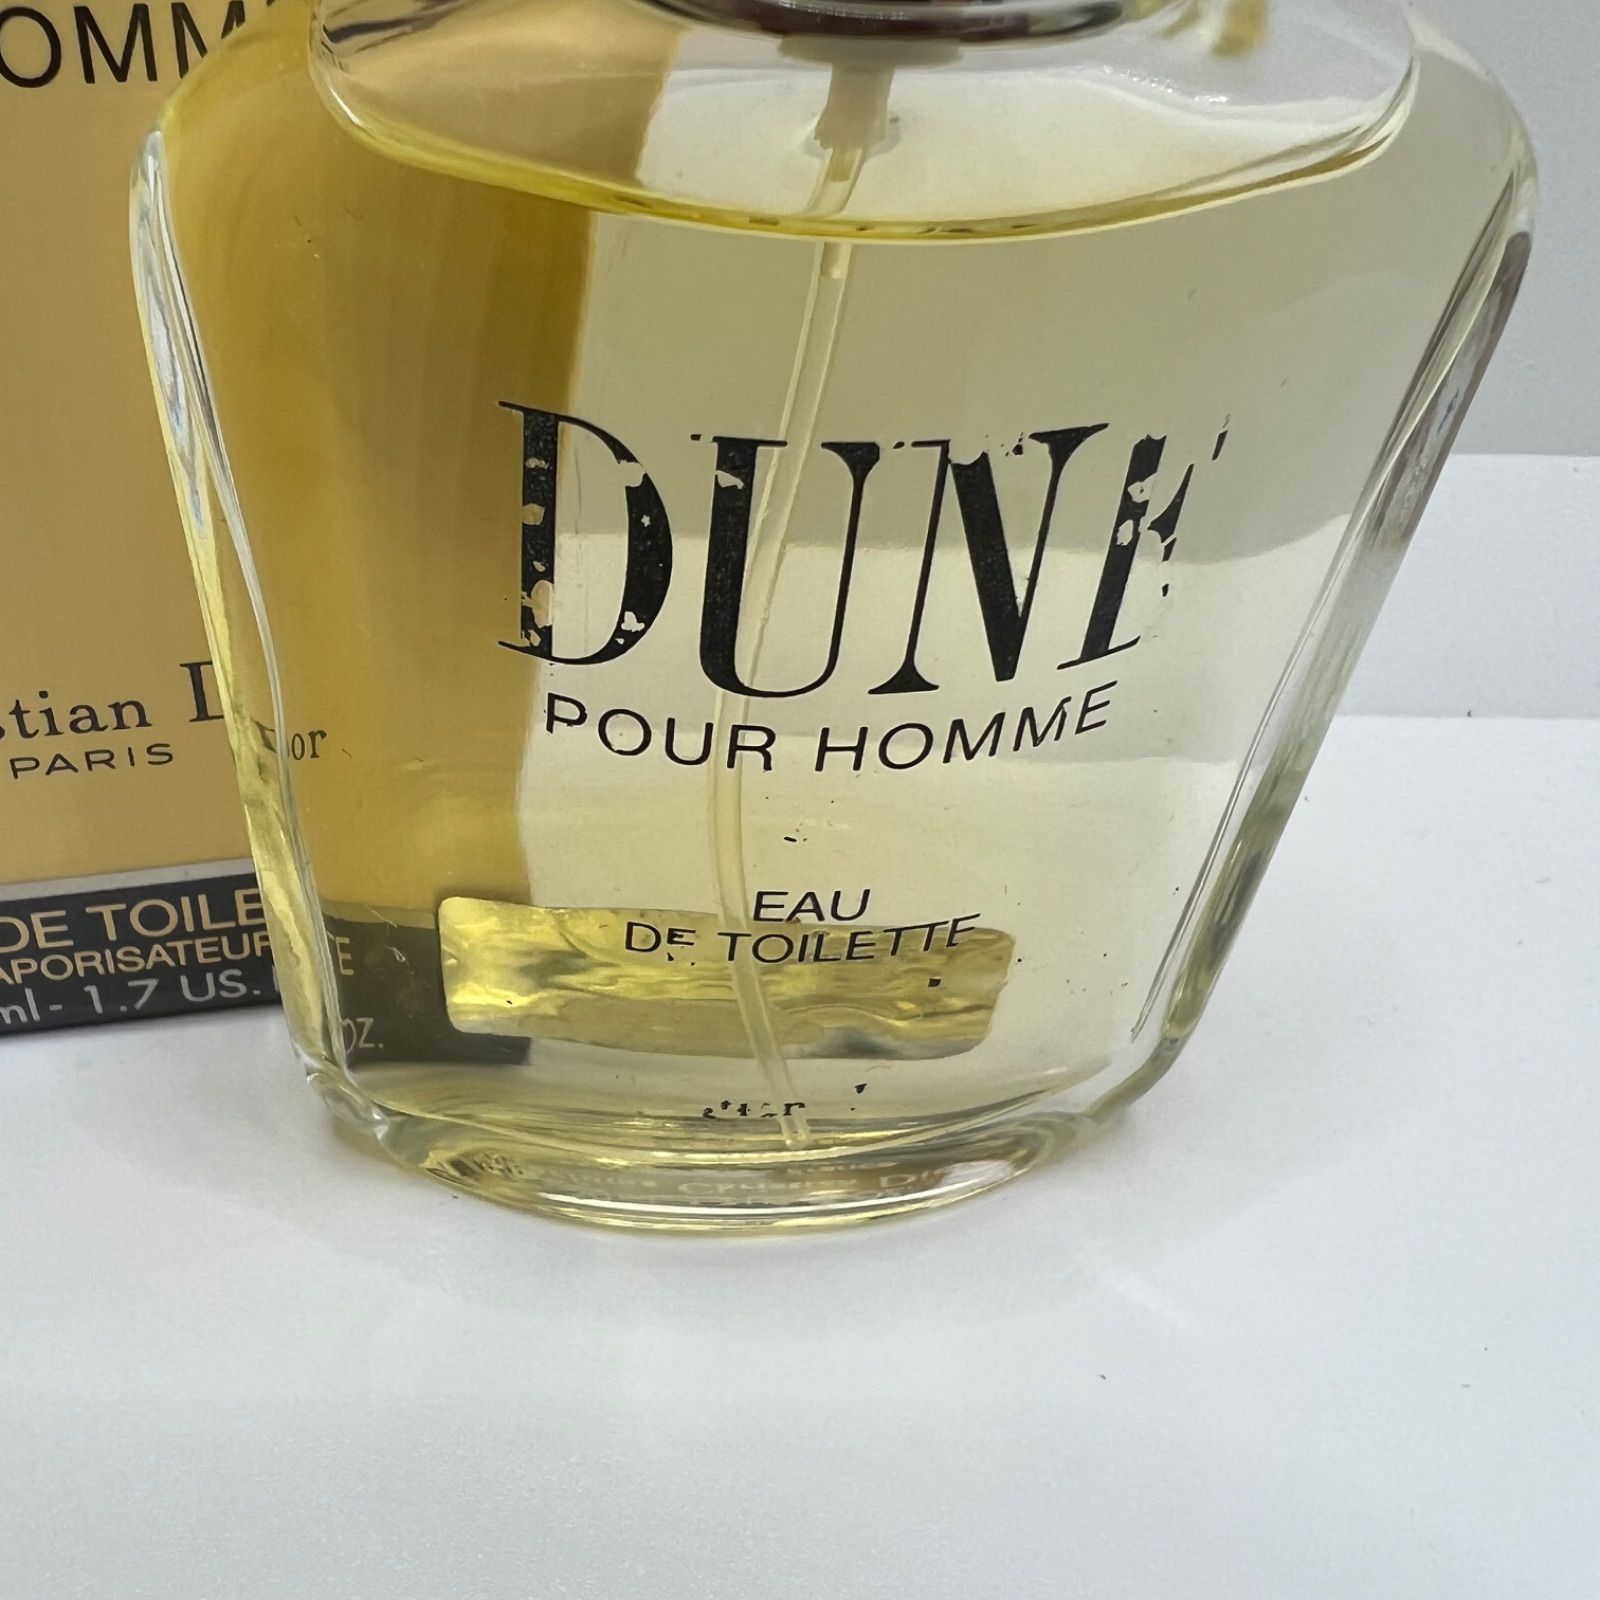 Dior DUNE POUR HOMME クリスチャン ディオール デューン プールオム 